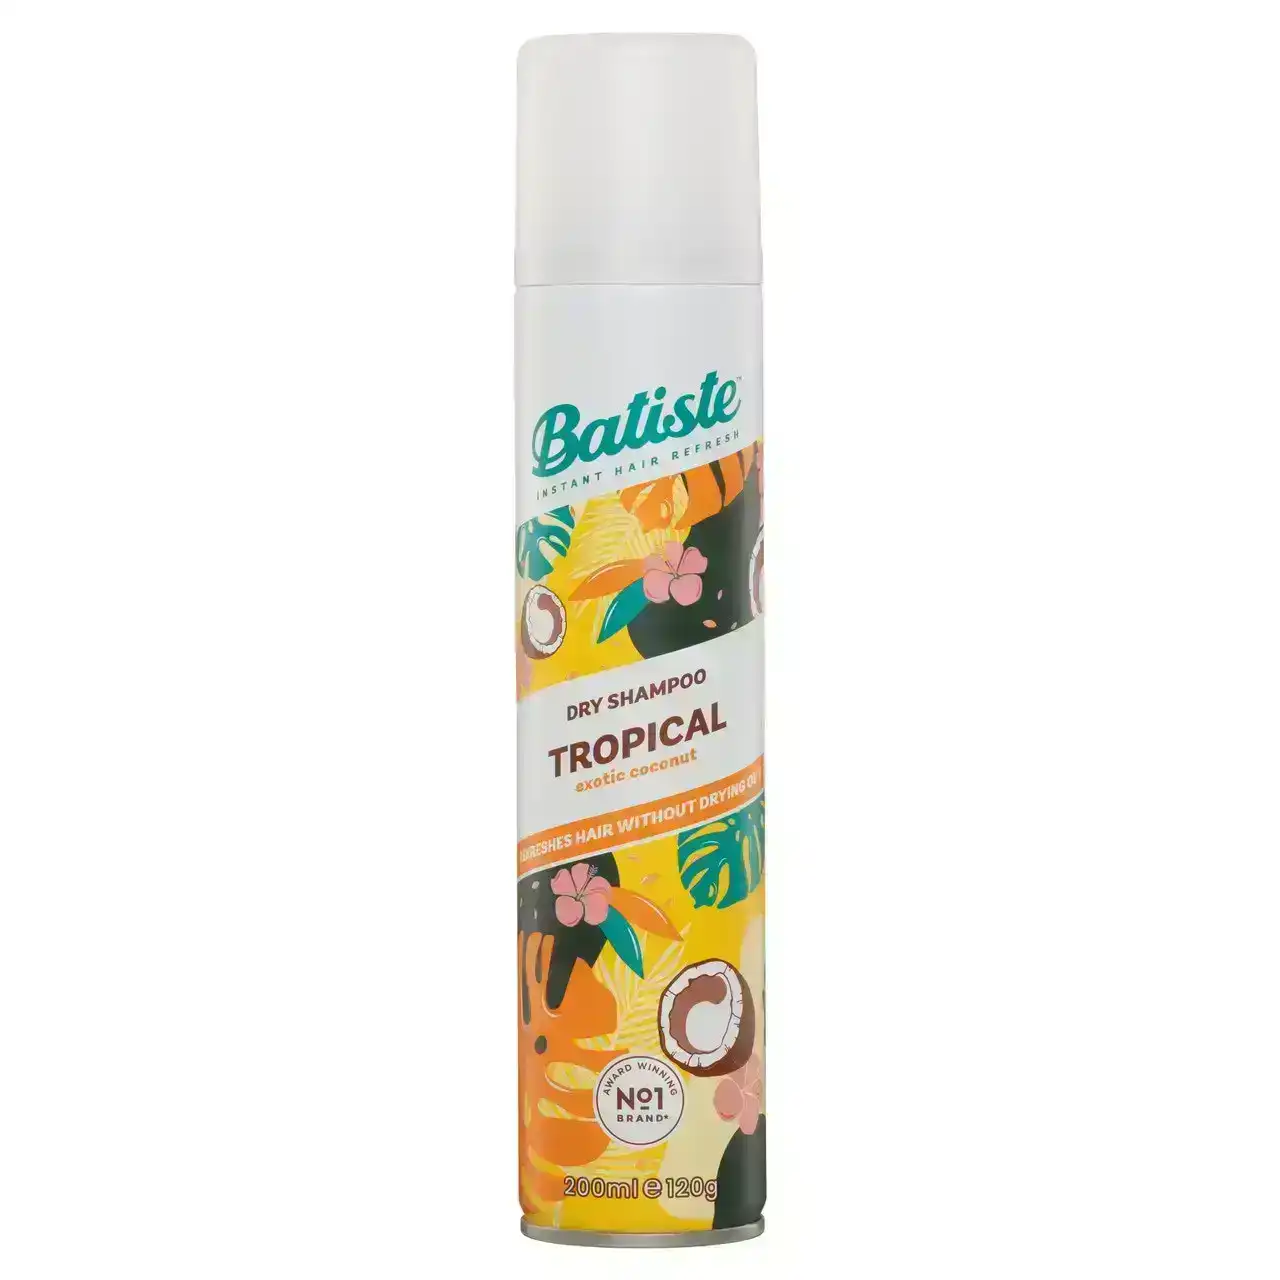 Batiste Tropical Dry Shampoo 200mL